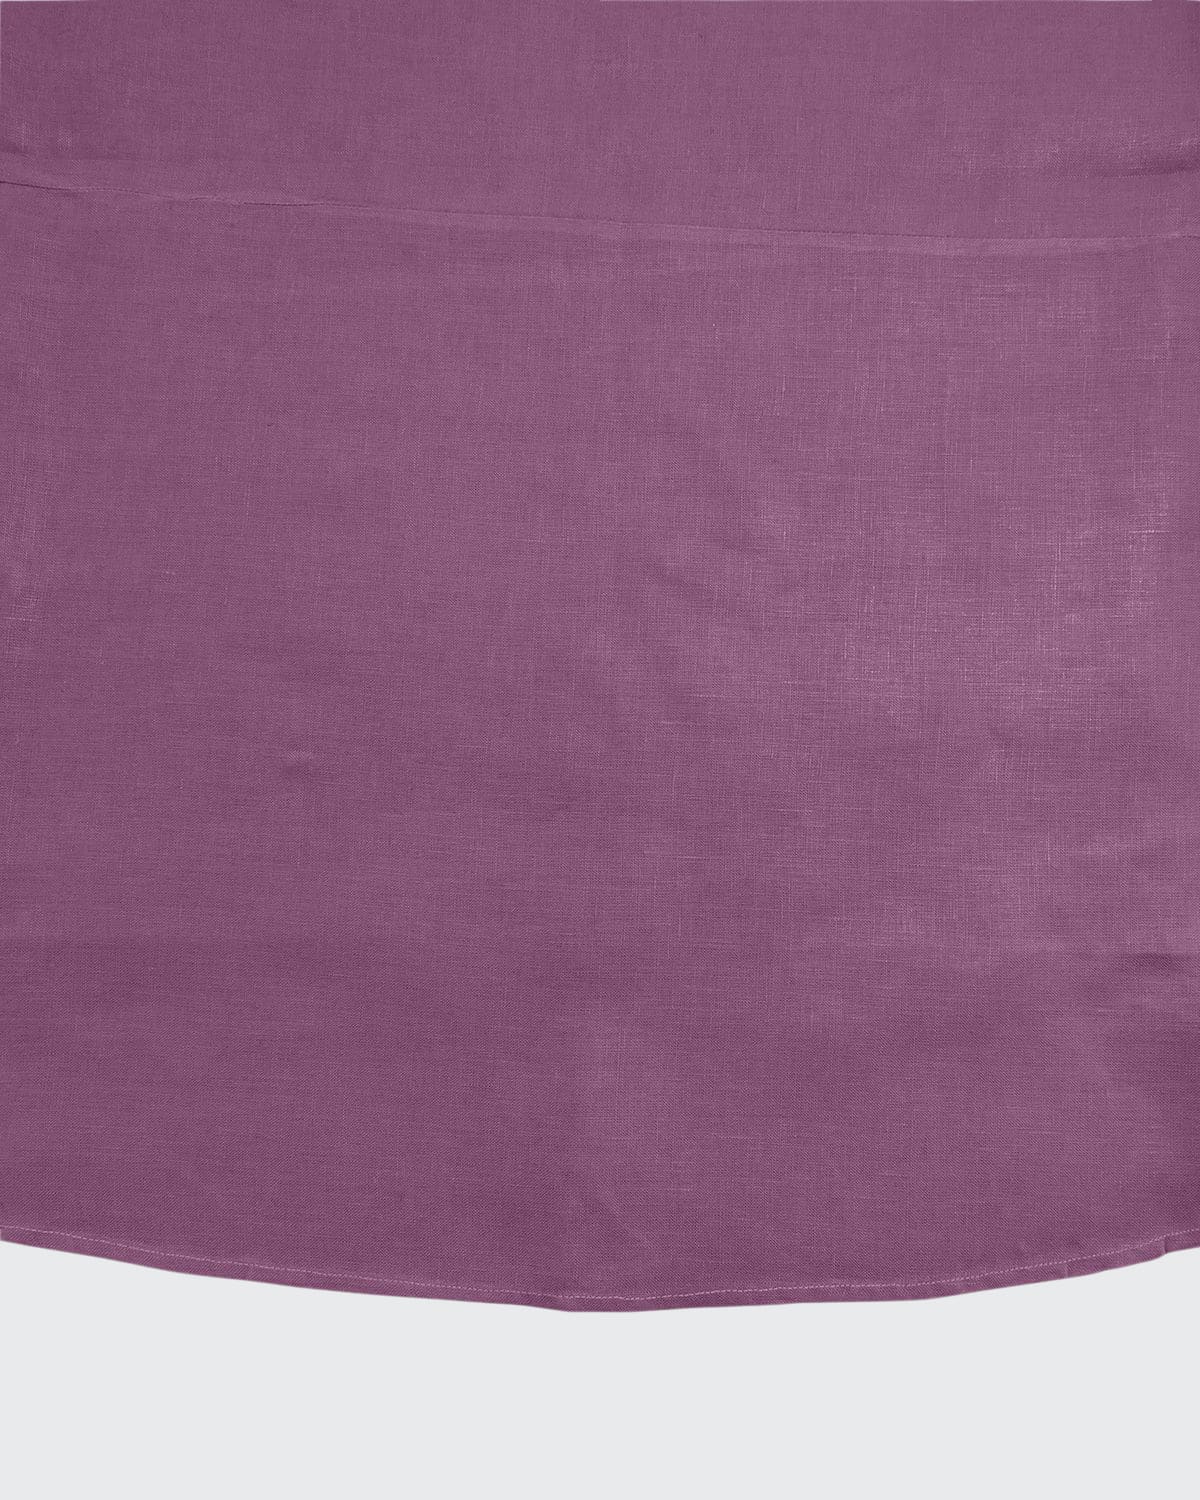 Sferra Hemstitch Round Tablecloth, 90"dia. In Lilac